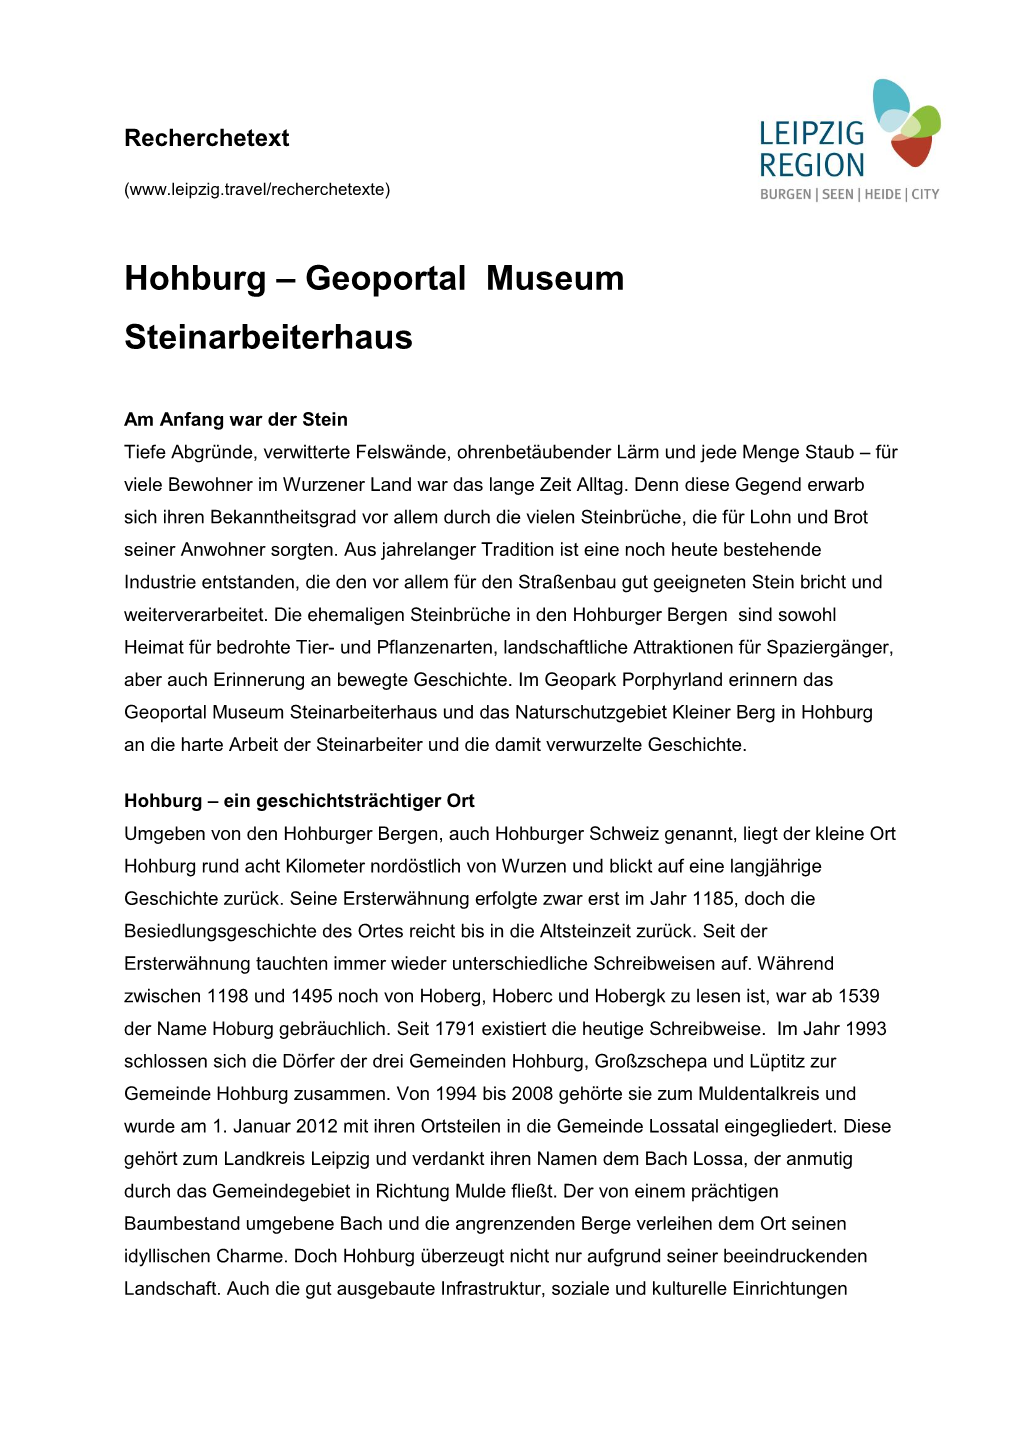 Hohburg – Geoportal Museum Steinarbeiterhaus